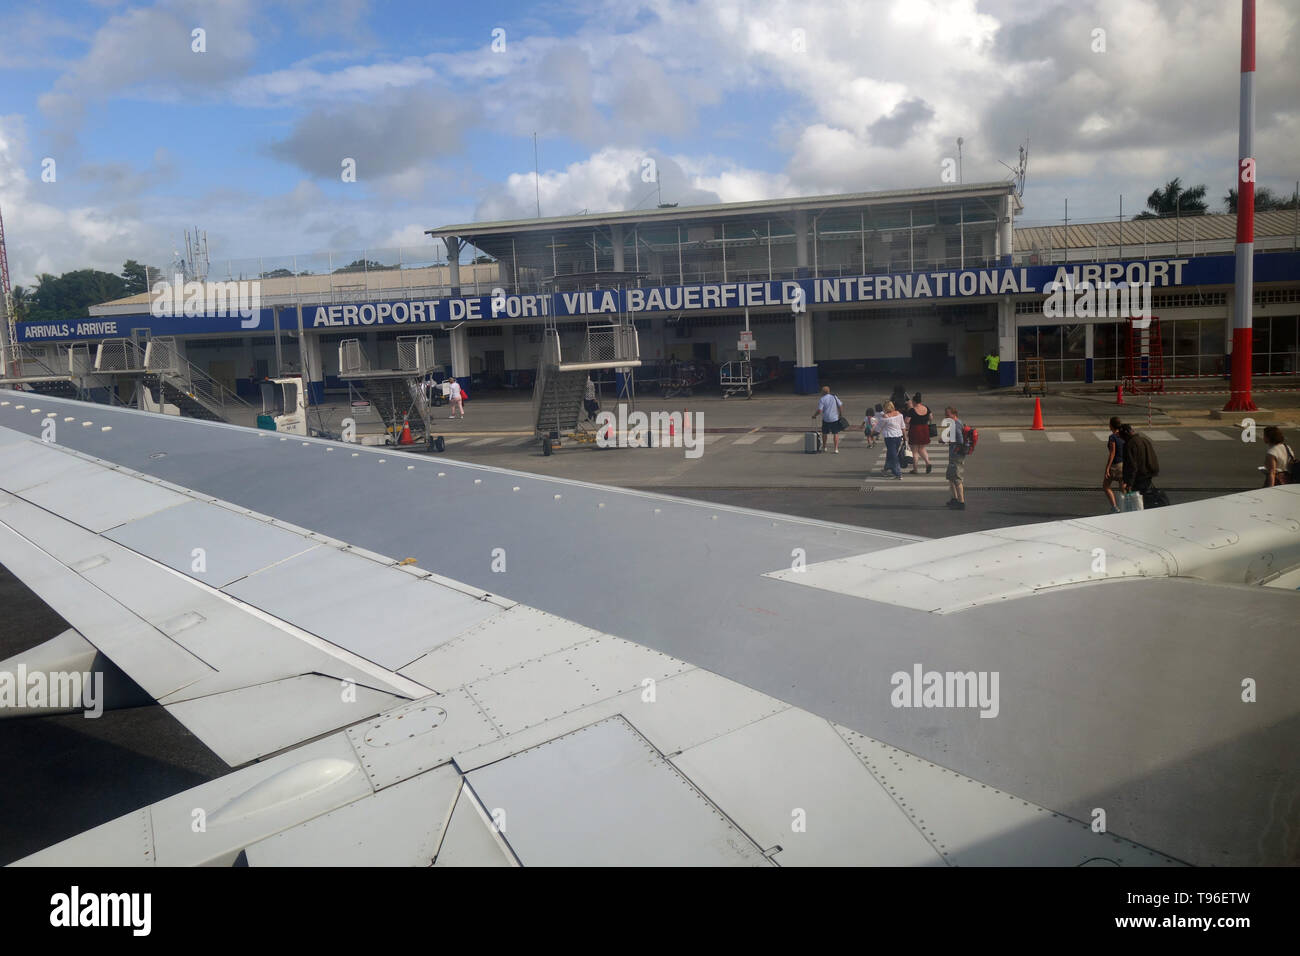 People disembarking plane arriving at Bauerfield International Airport, Port Vila, Efate, Vanuatu. no MR or PR Stock Photo